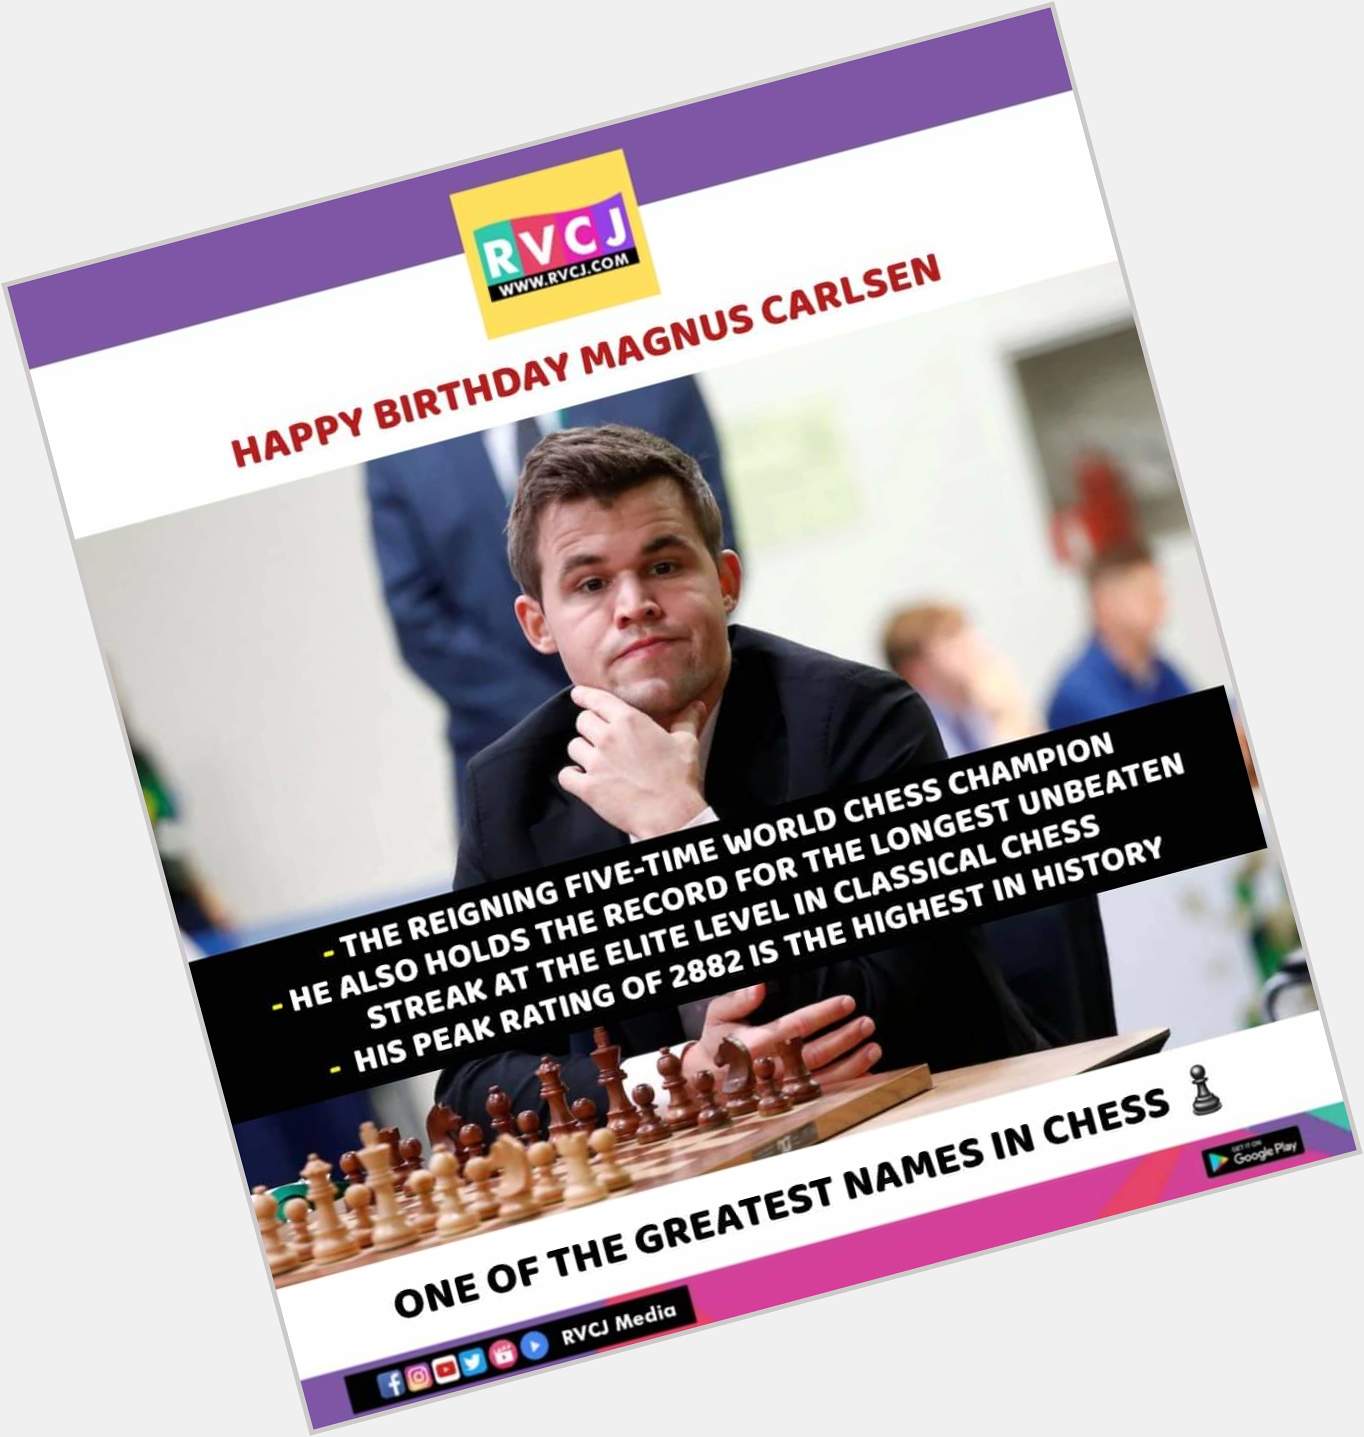 Happy Birthday Magnus Carlsen!   